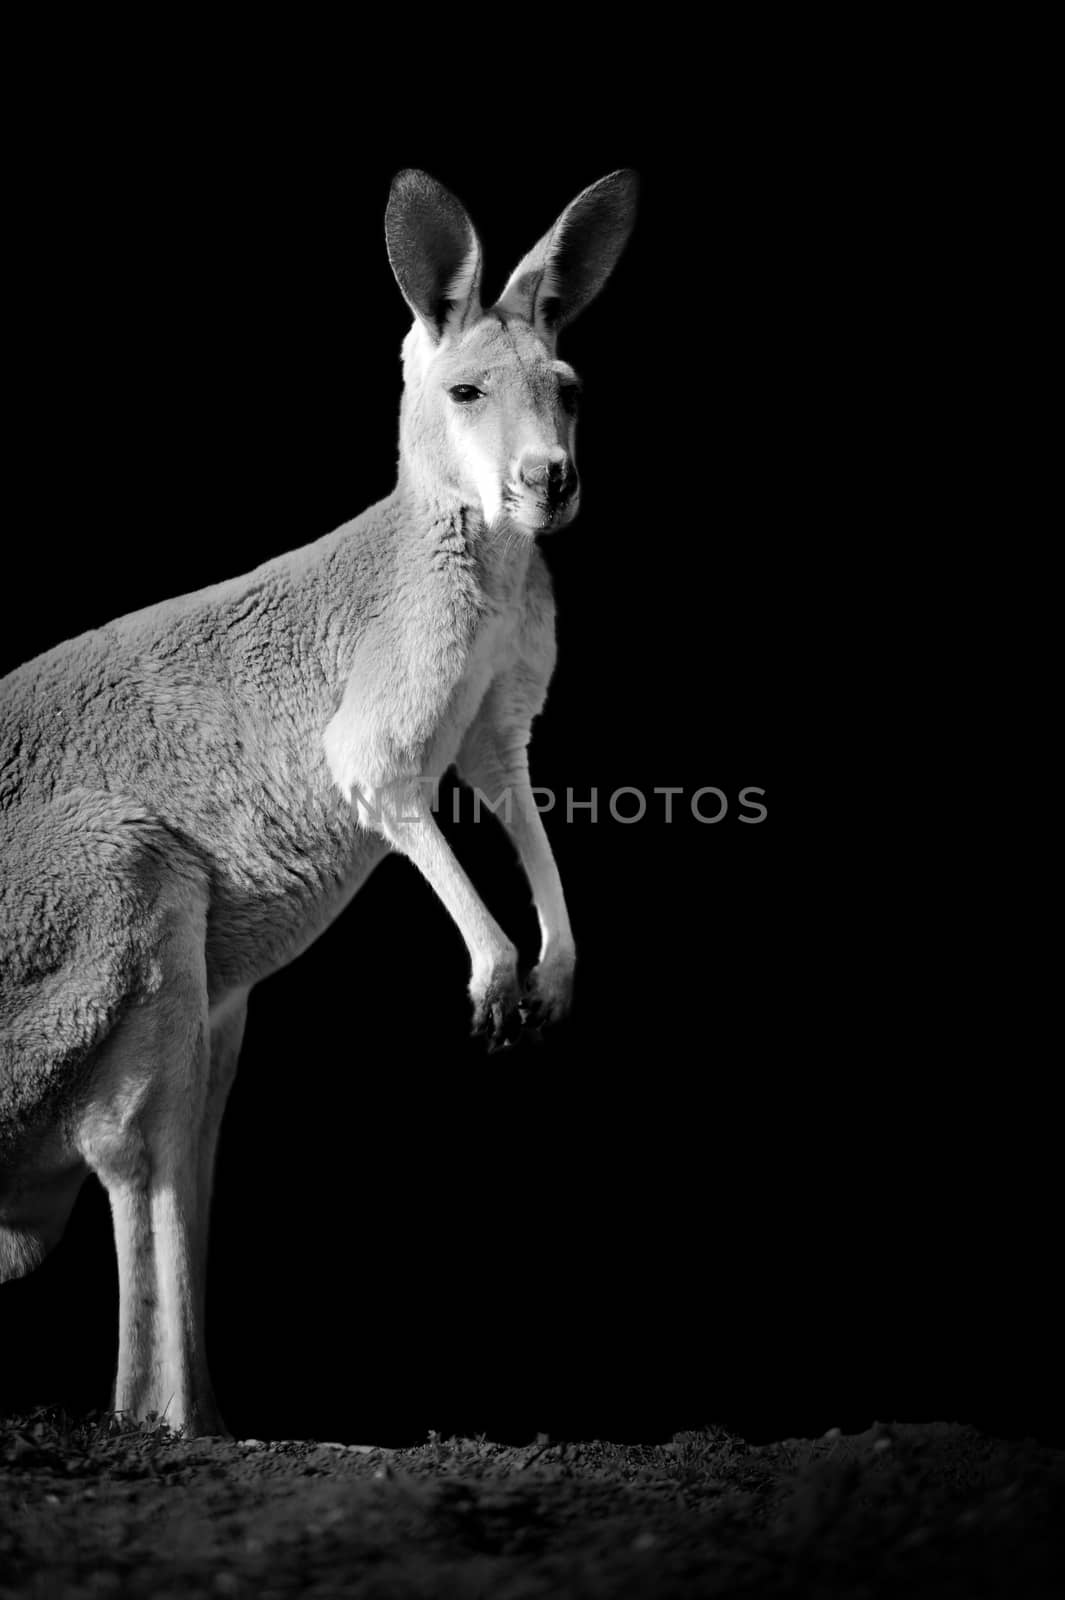 Kangaroo on dark background. Black and white image